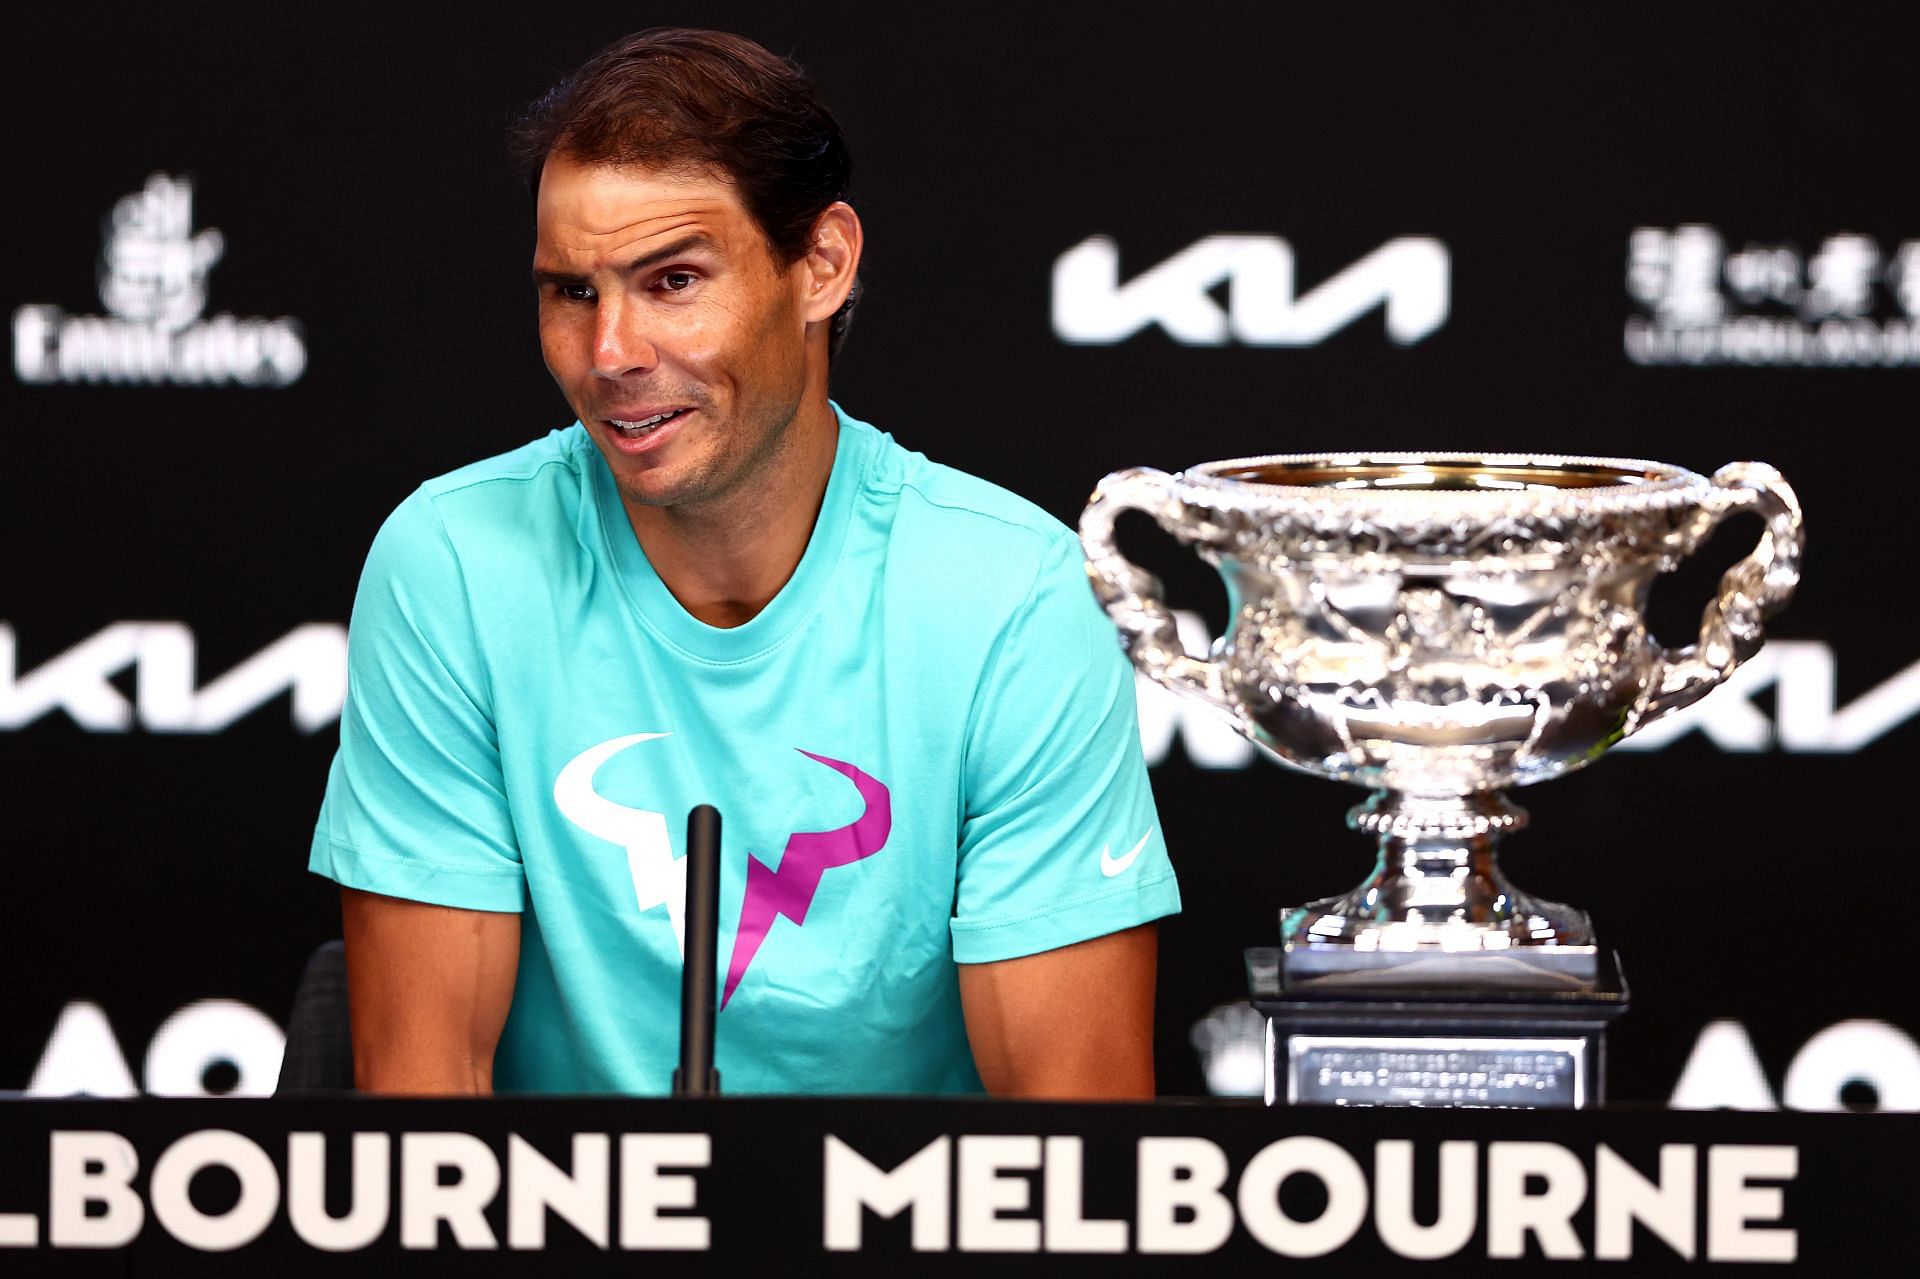 Rafael Nadal won the Australian Open this year